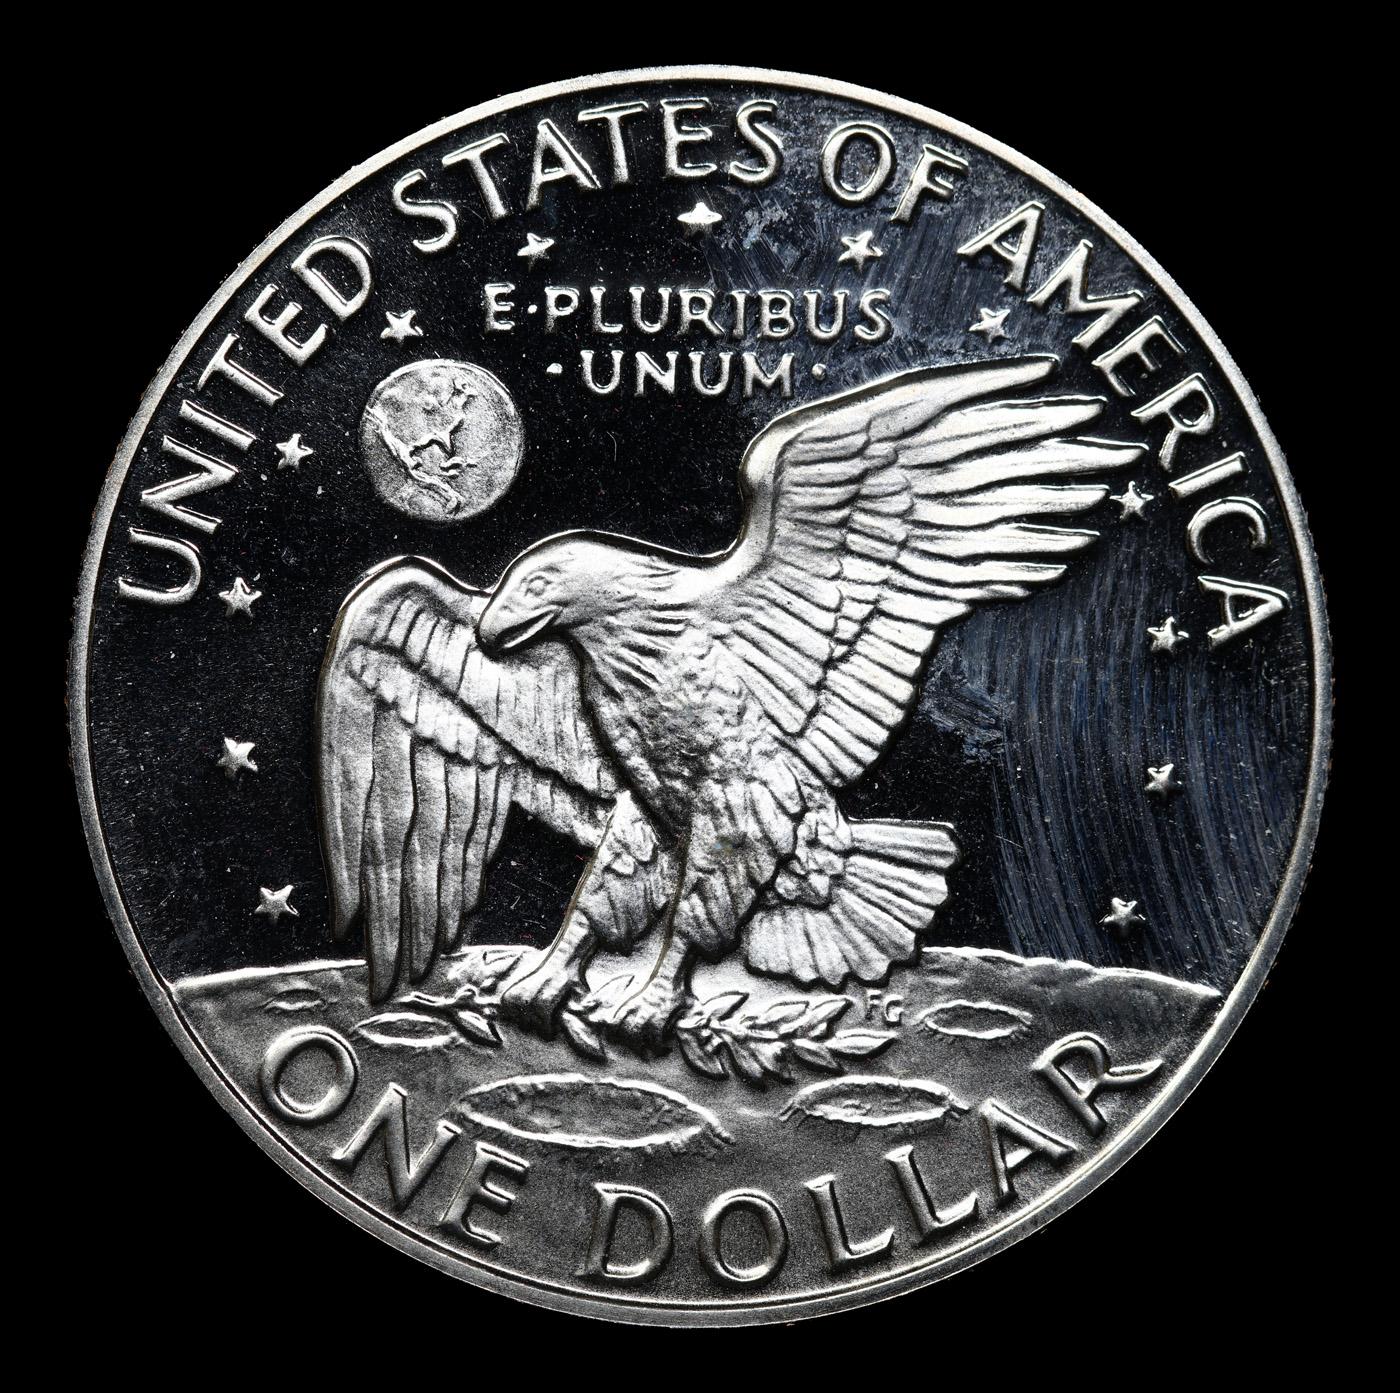 Proof 1977-s Eisenhower Dollar $1 Grades GEM++ Proof Deep Cameo